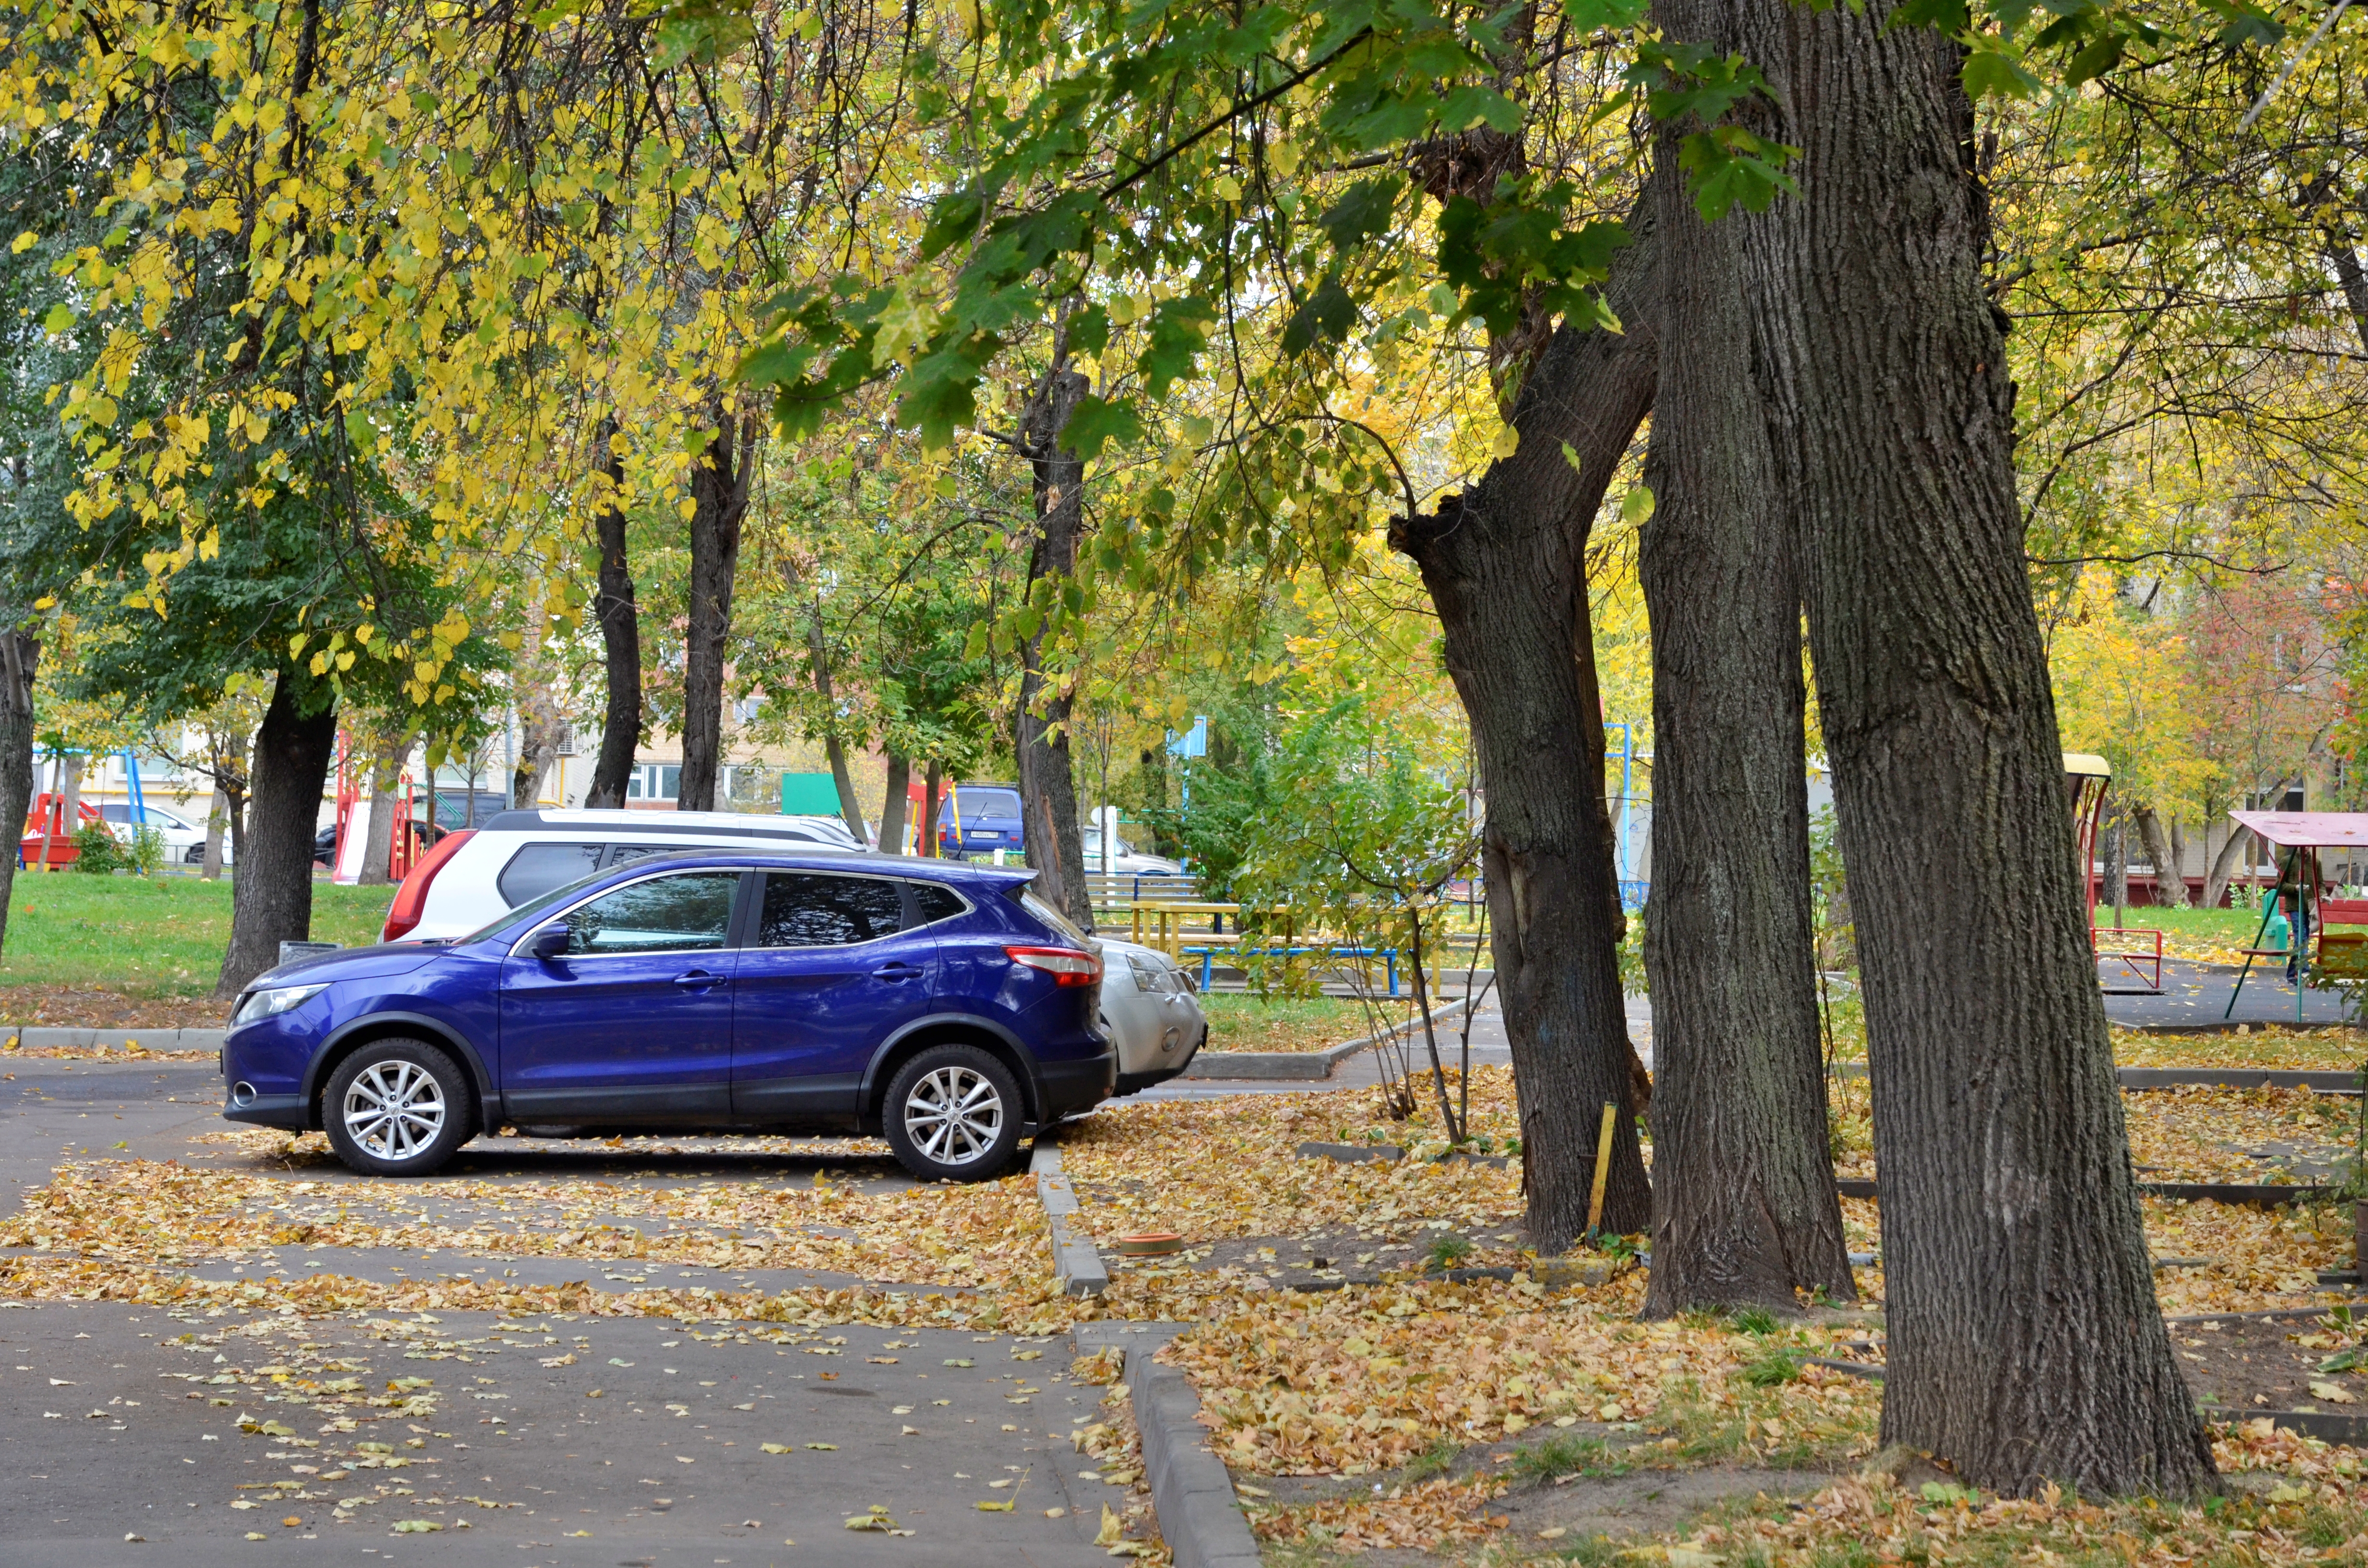 Специалисты обустроят парковку на 30 машиномест и тротуар. Фото: Анна Быкова